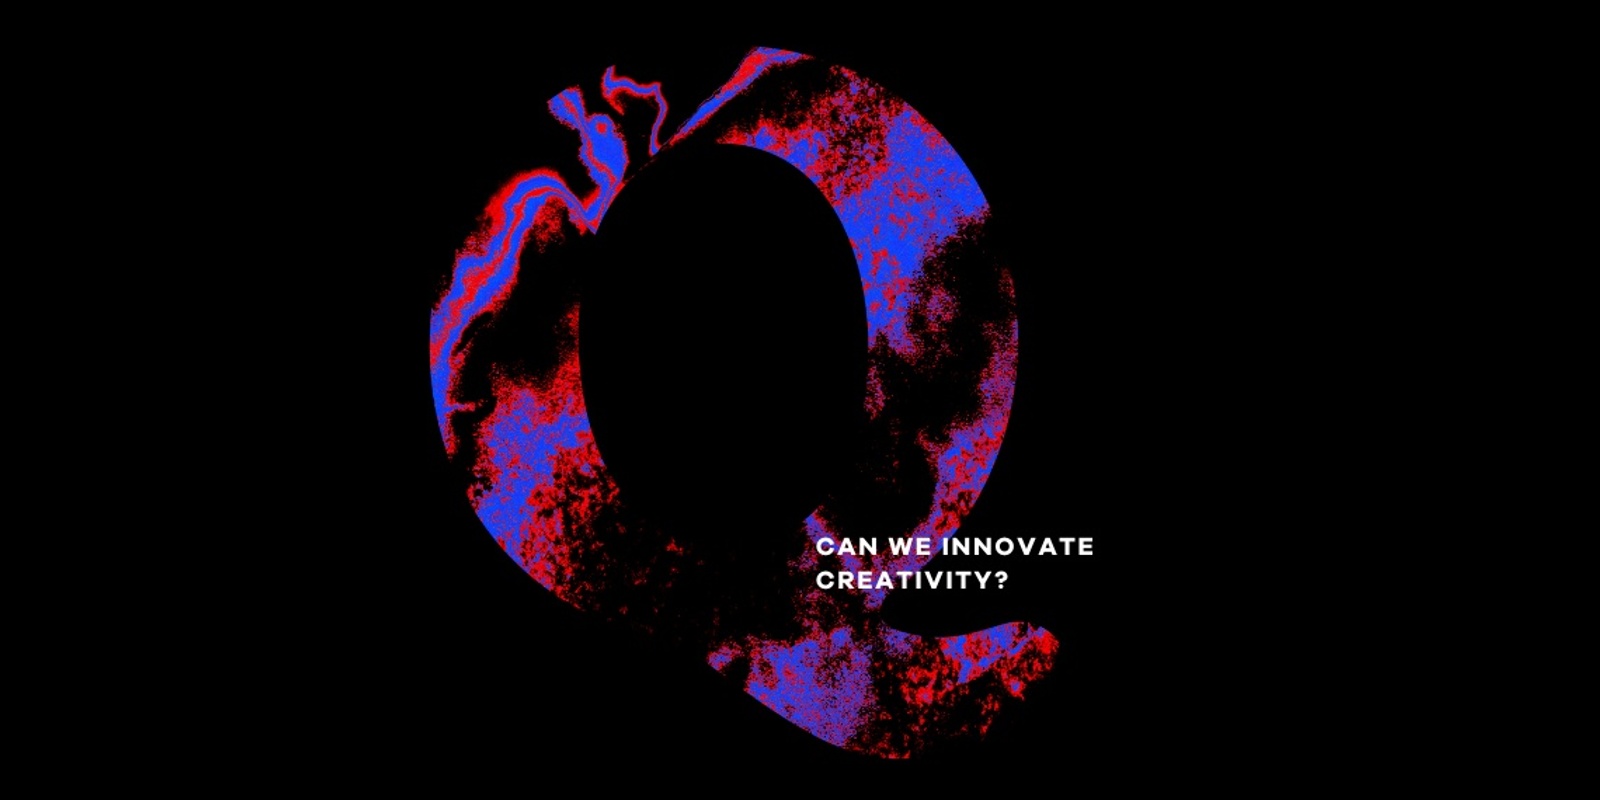 Q: Can we innovate creativity?